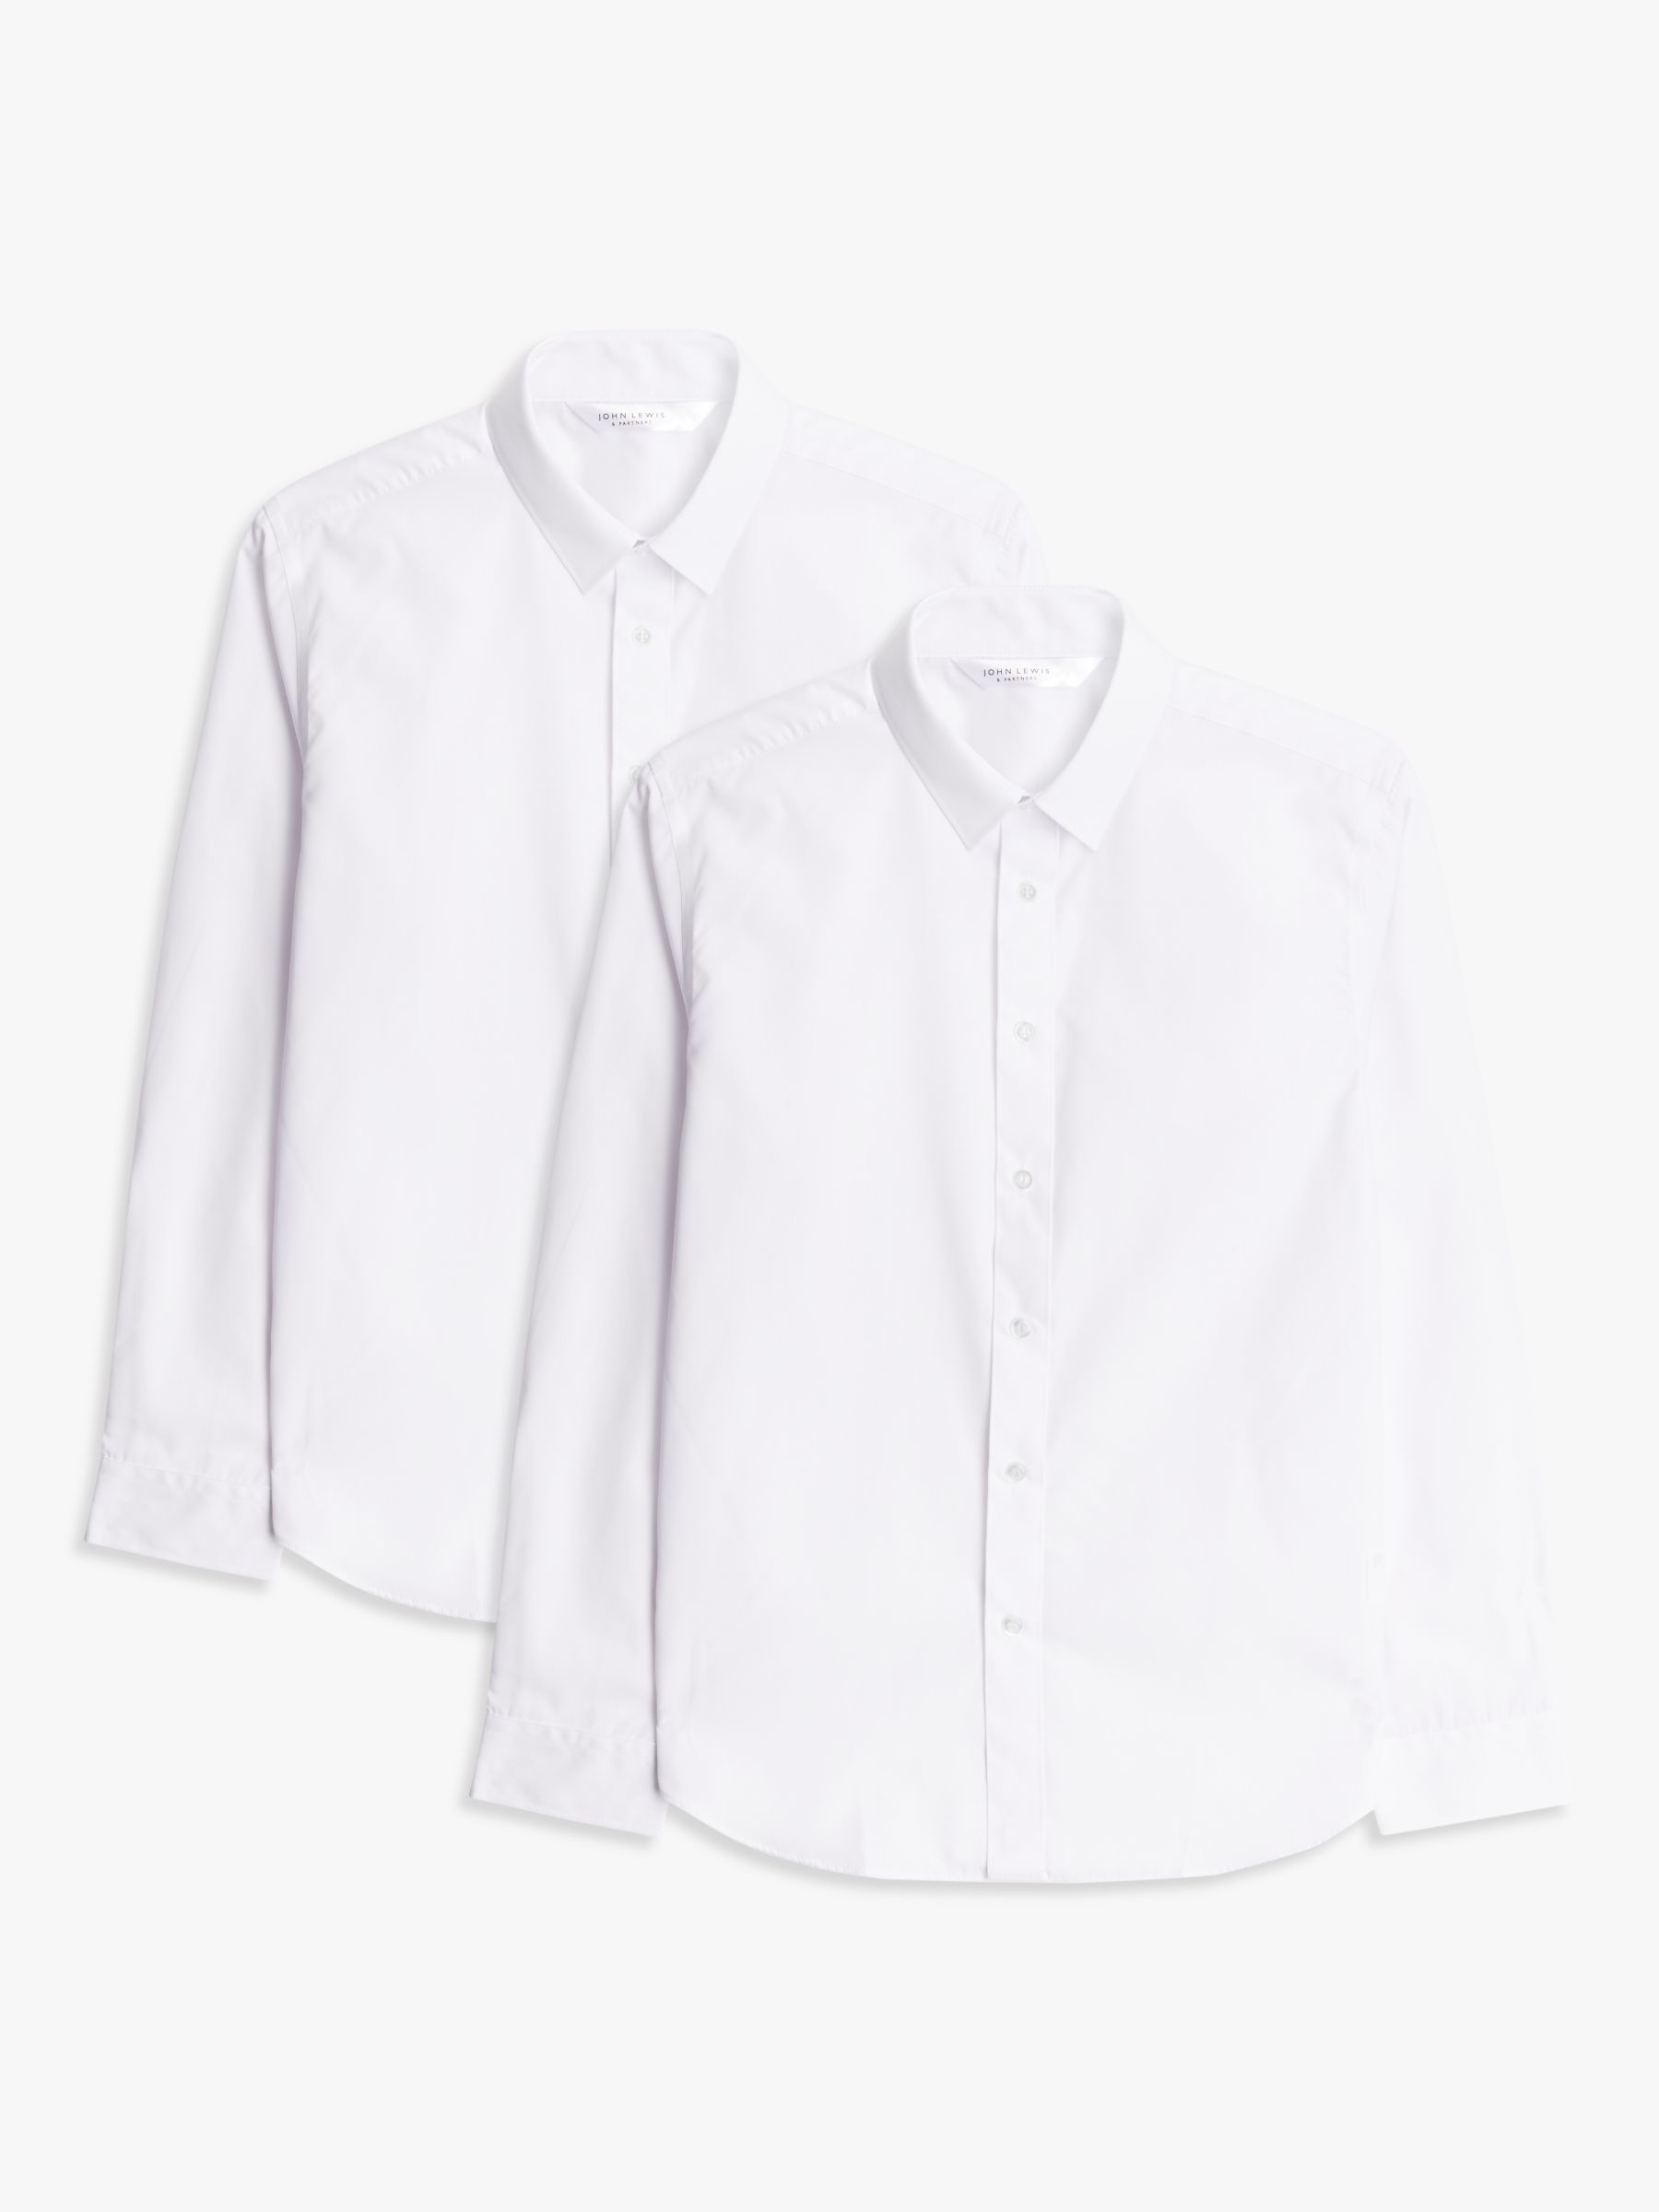 John Lewis & Partners Boys' Slim Fit Stain Resistant Long Sleeve School Shirt, Pack of 2, White